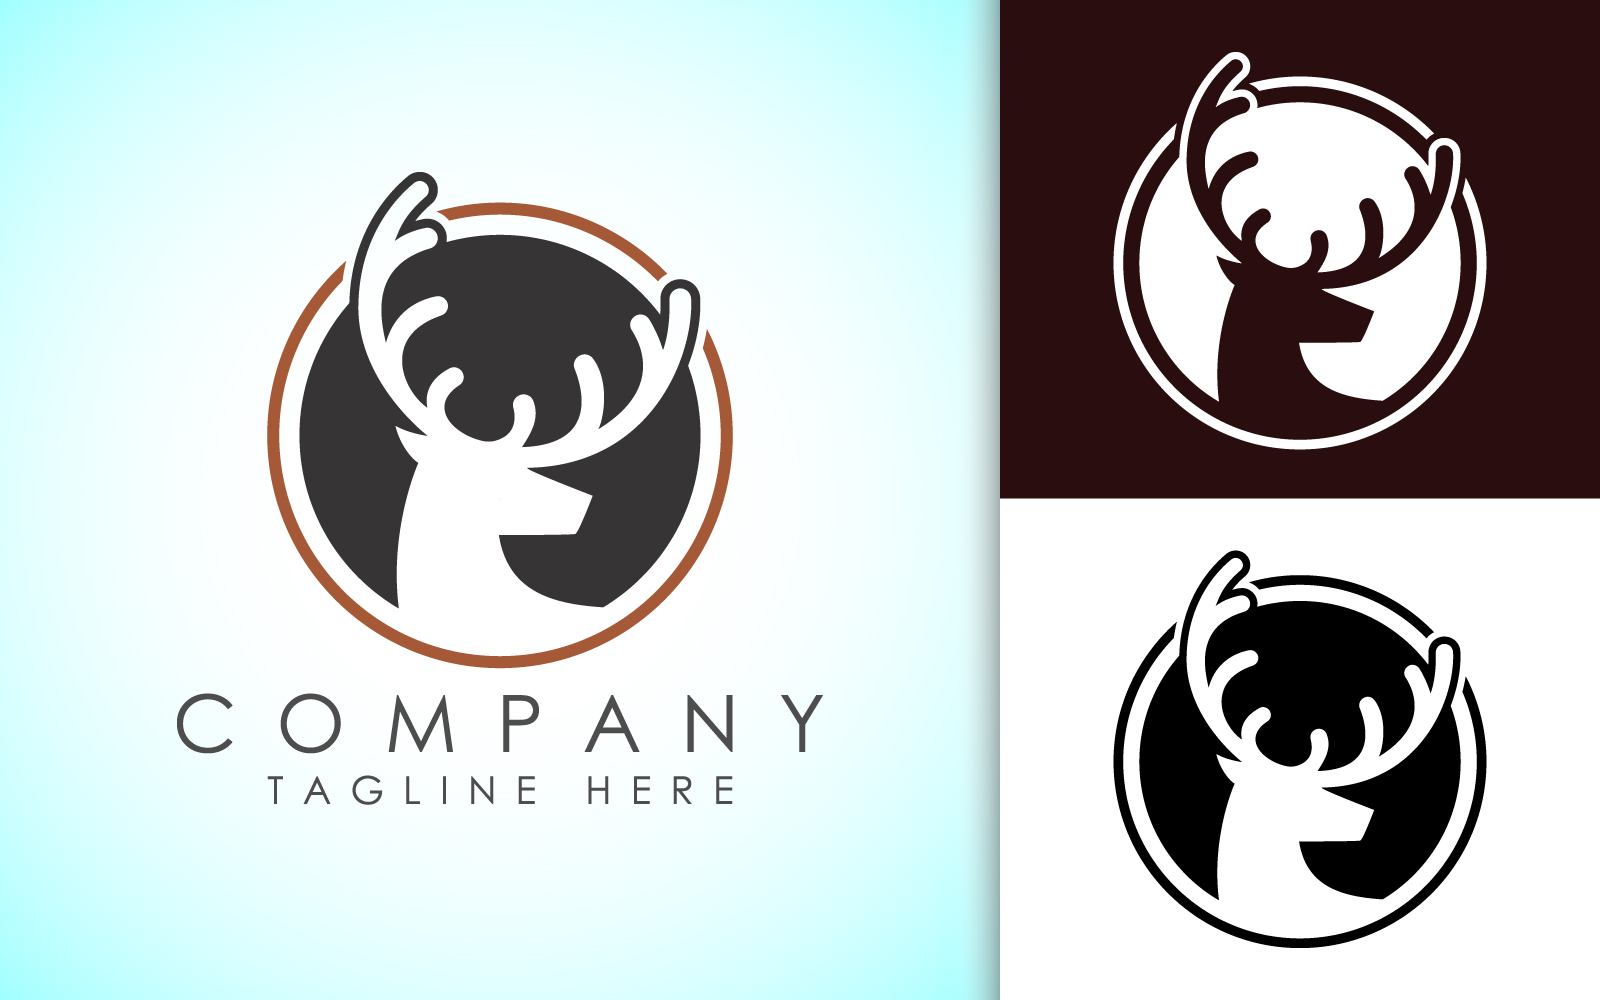 Hunting logo design. Deer head logo